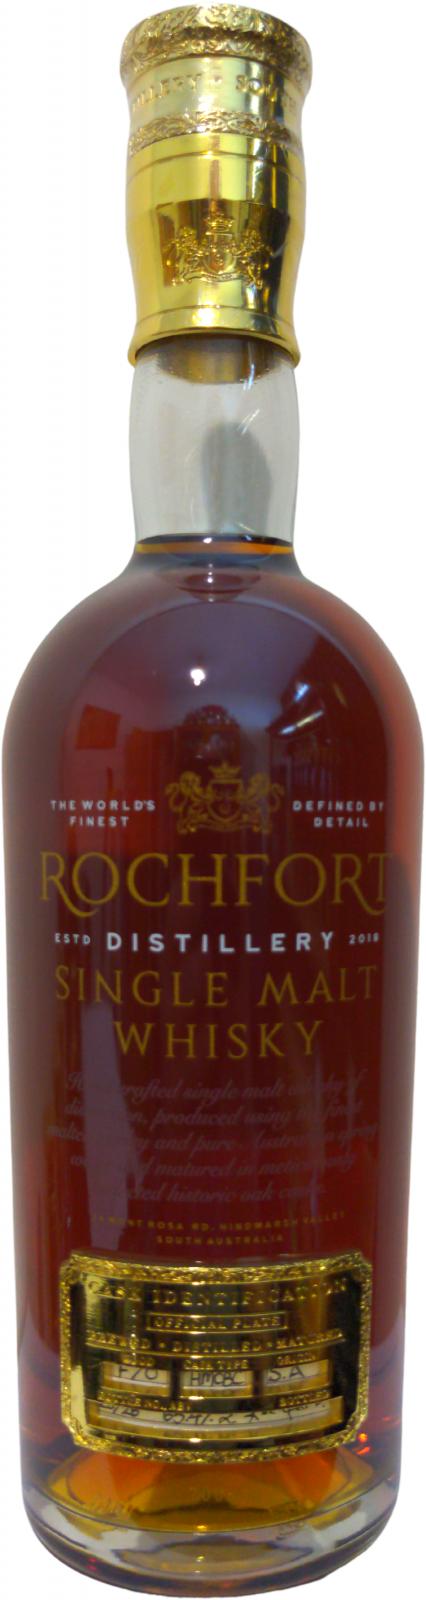 Rochfort Single Malt Whisky 15th Release Hmcbc 65.4% 700ml